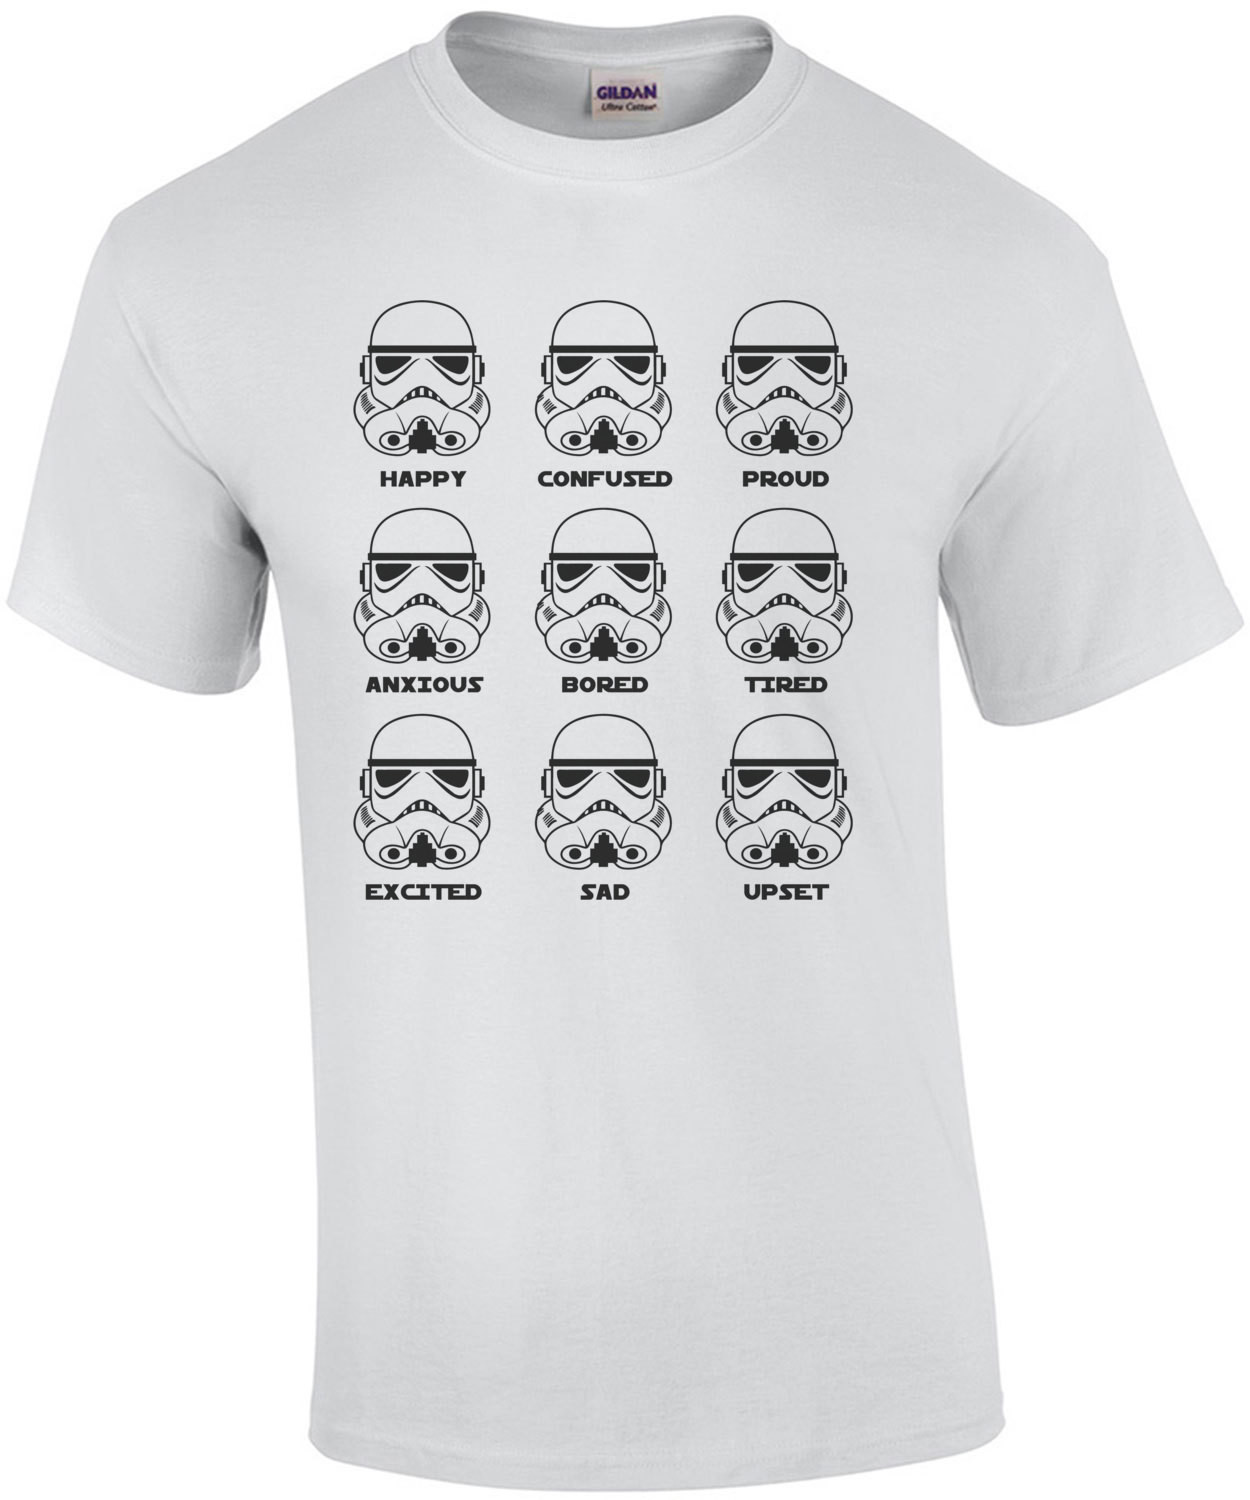 Stormtrooper Emotions - Funny Star Wars T-Shirt